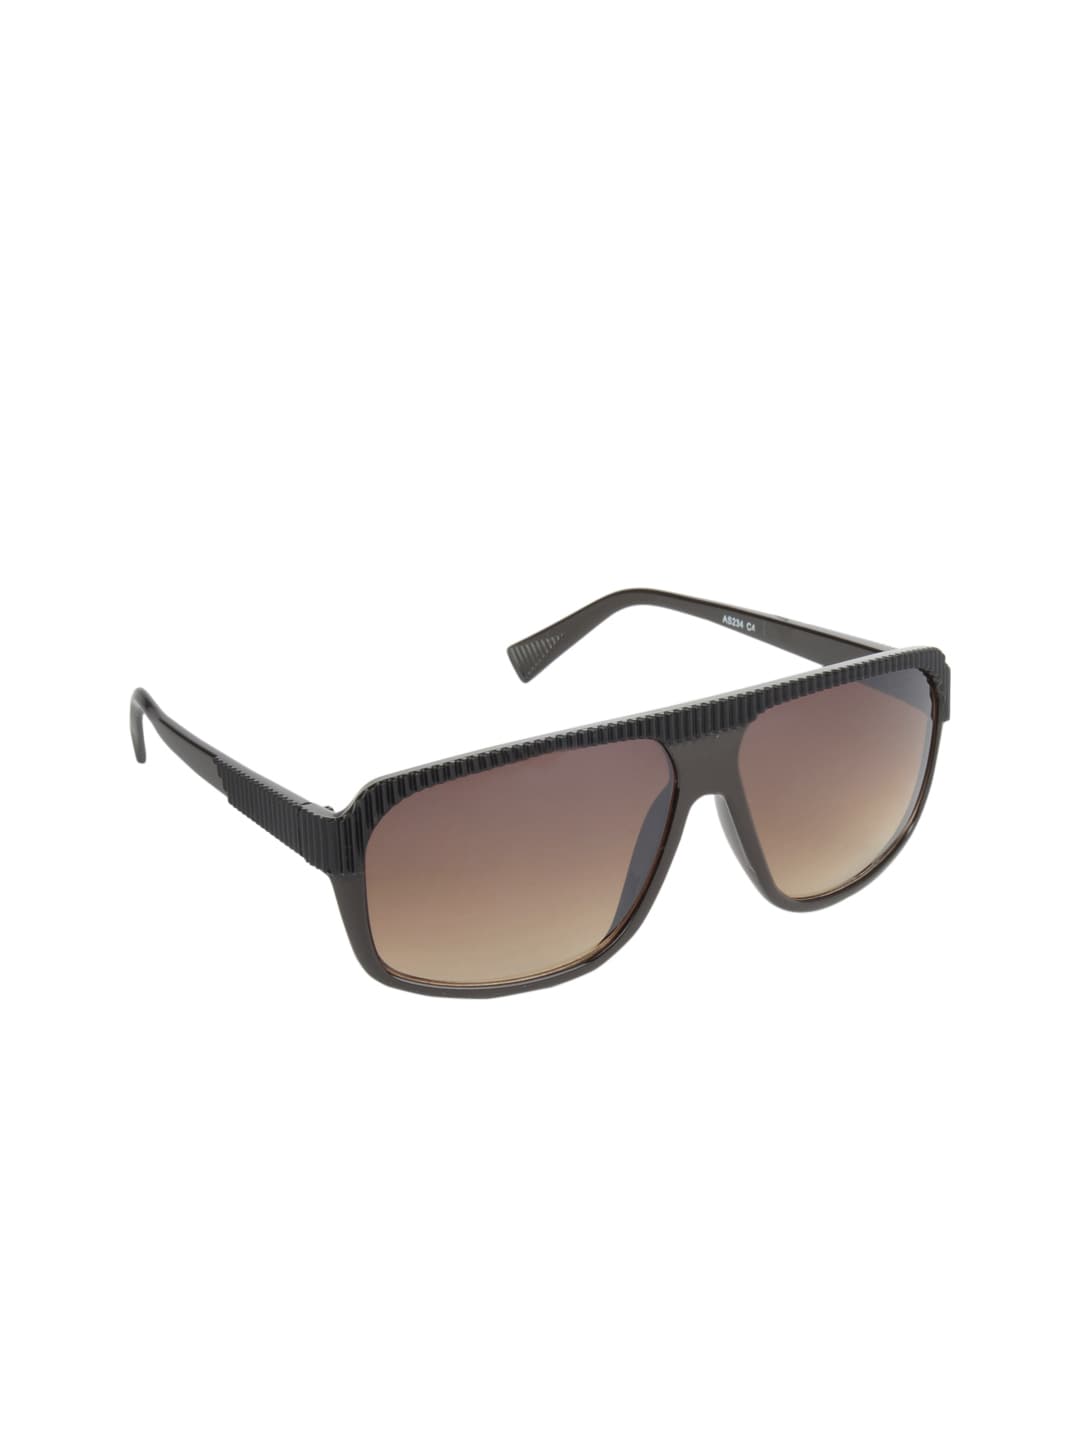 Allen Solly Unisex Sunglasses